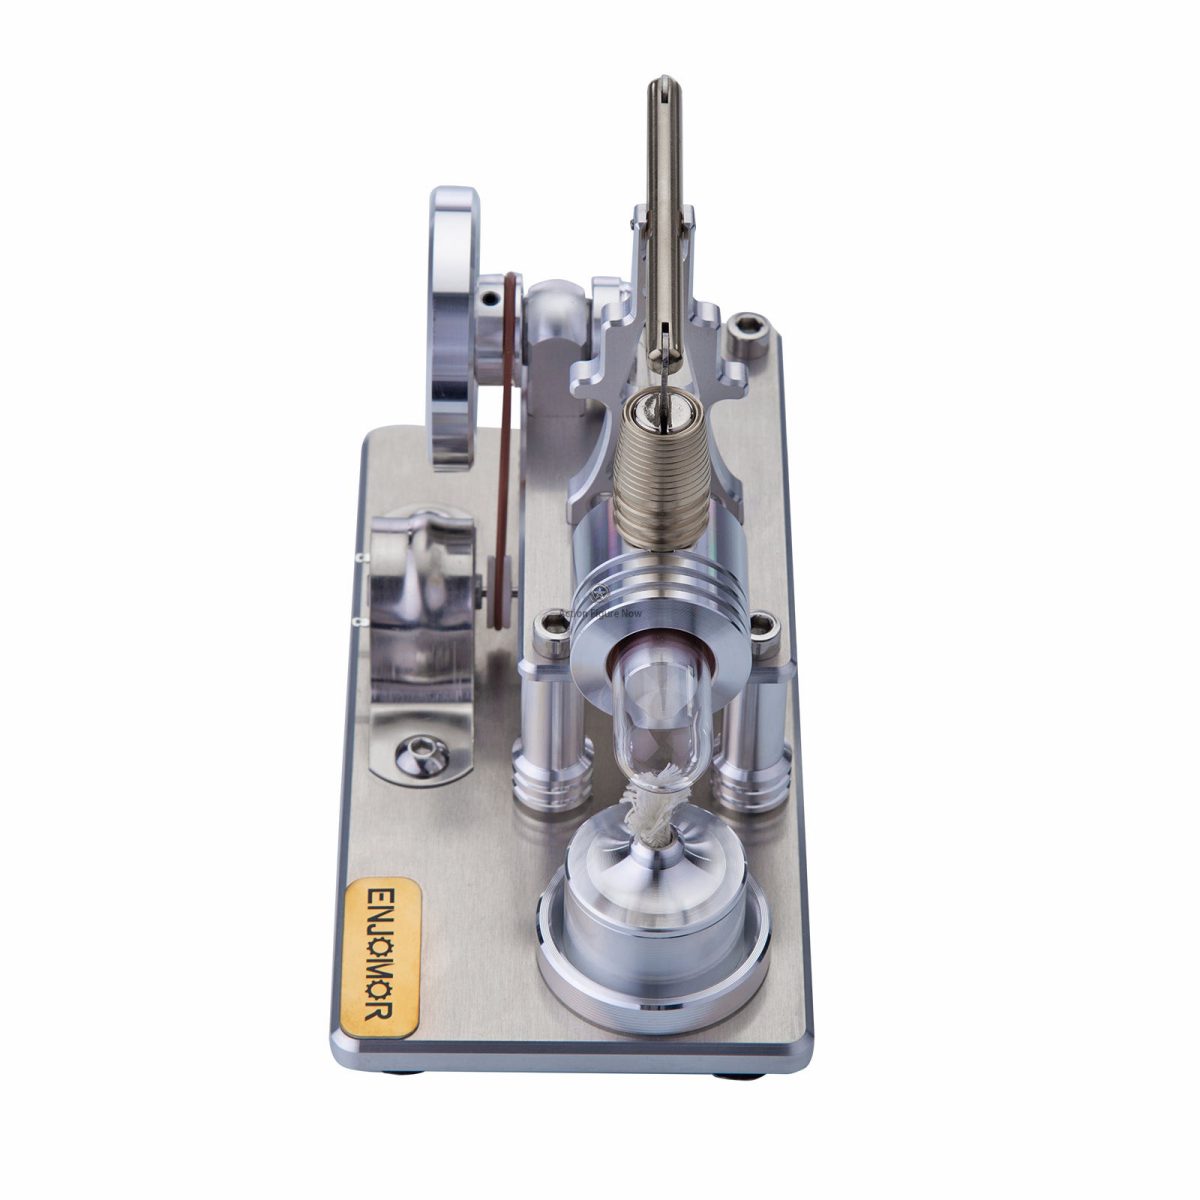 Stirling Engine Model Kit with LED Illumination and Metal Piston